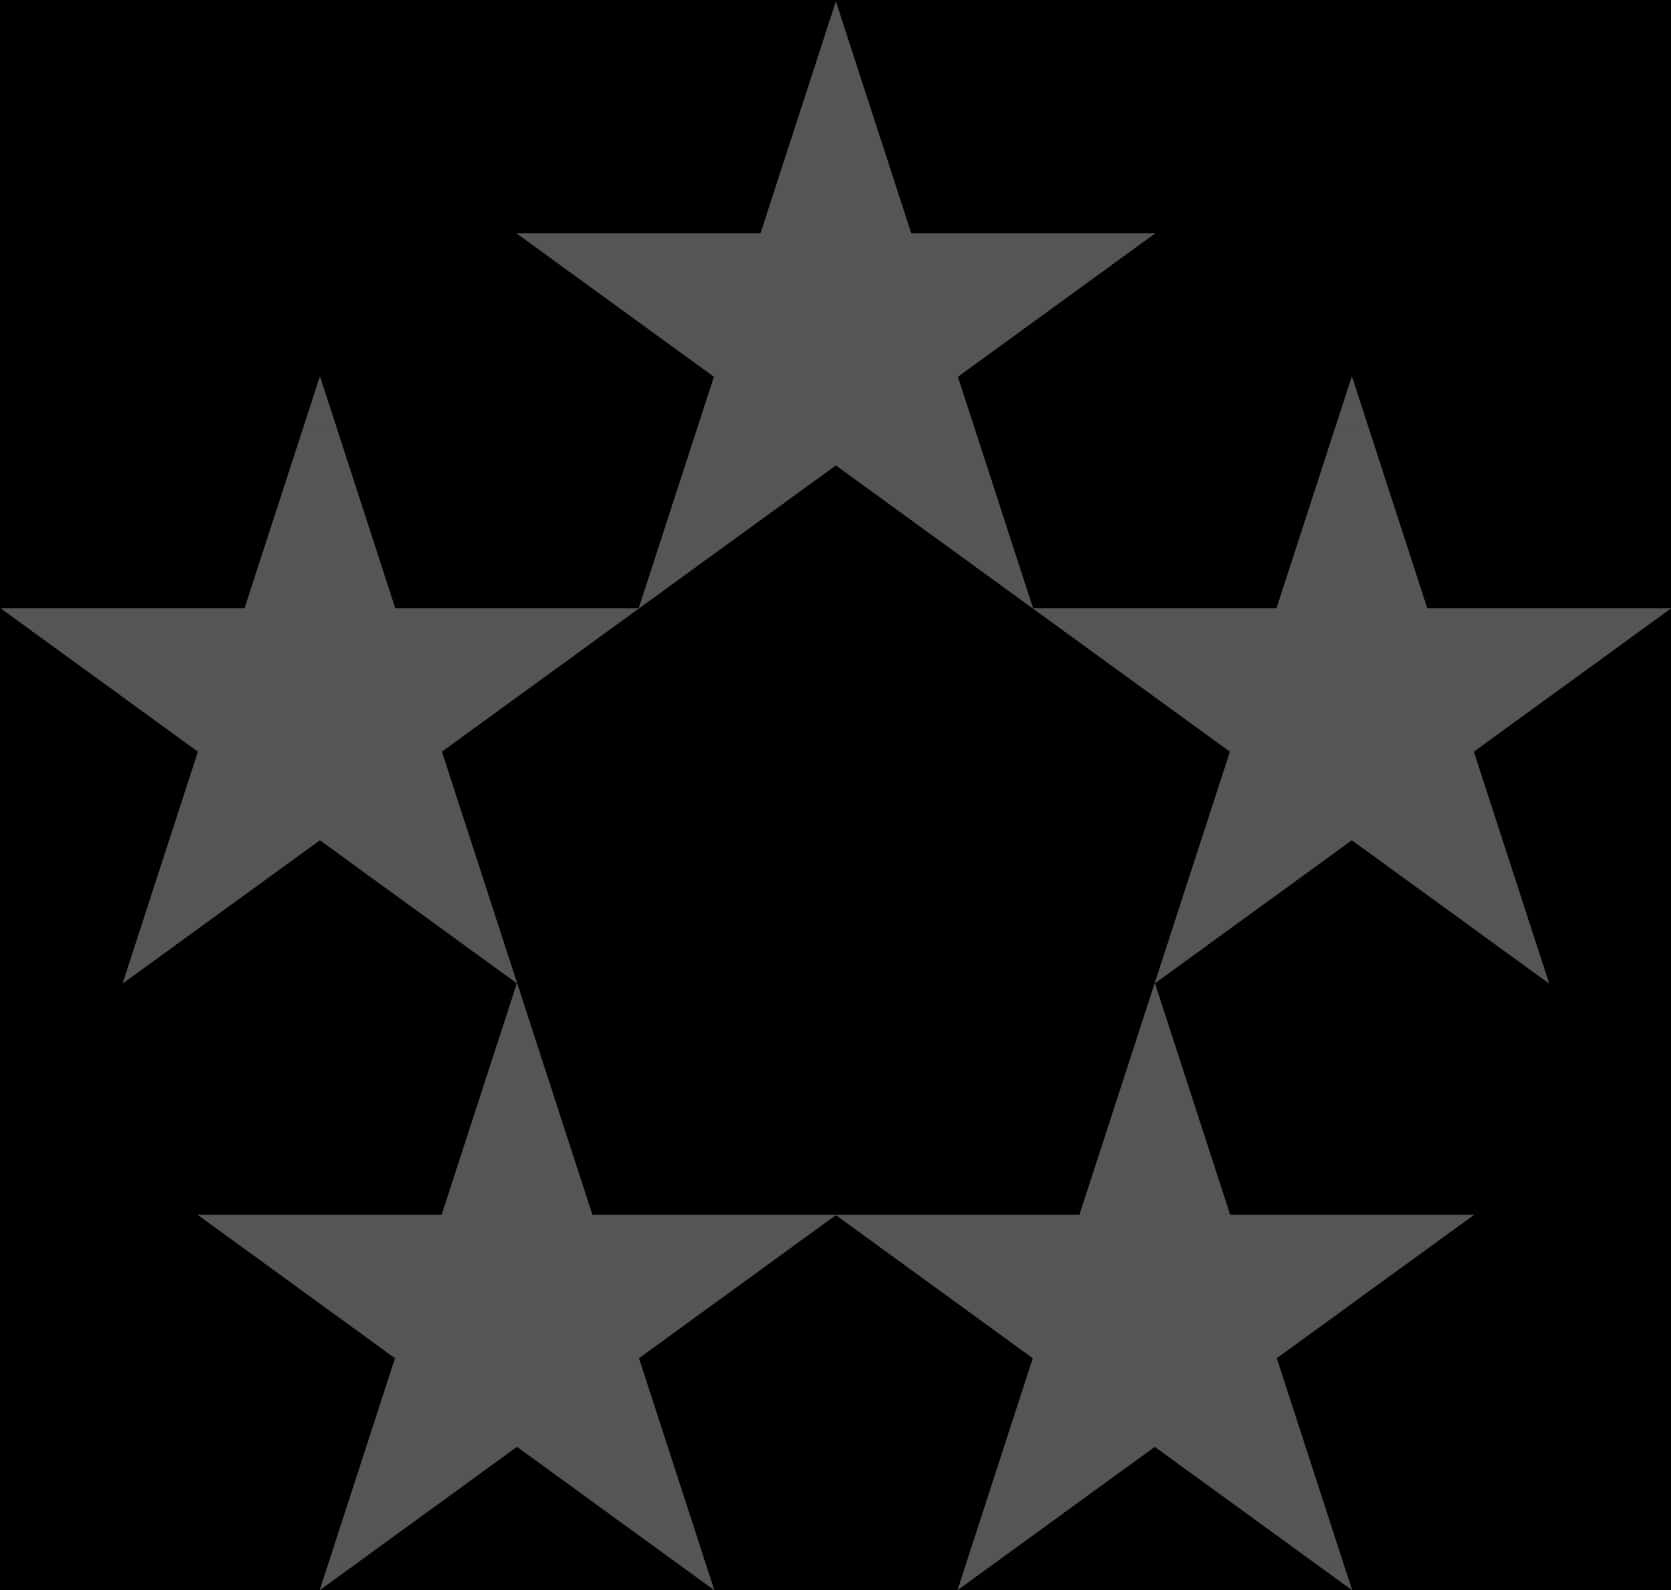 Five Black Stars Graphic